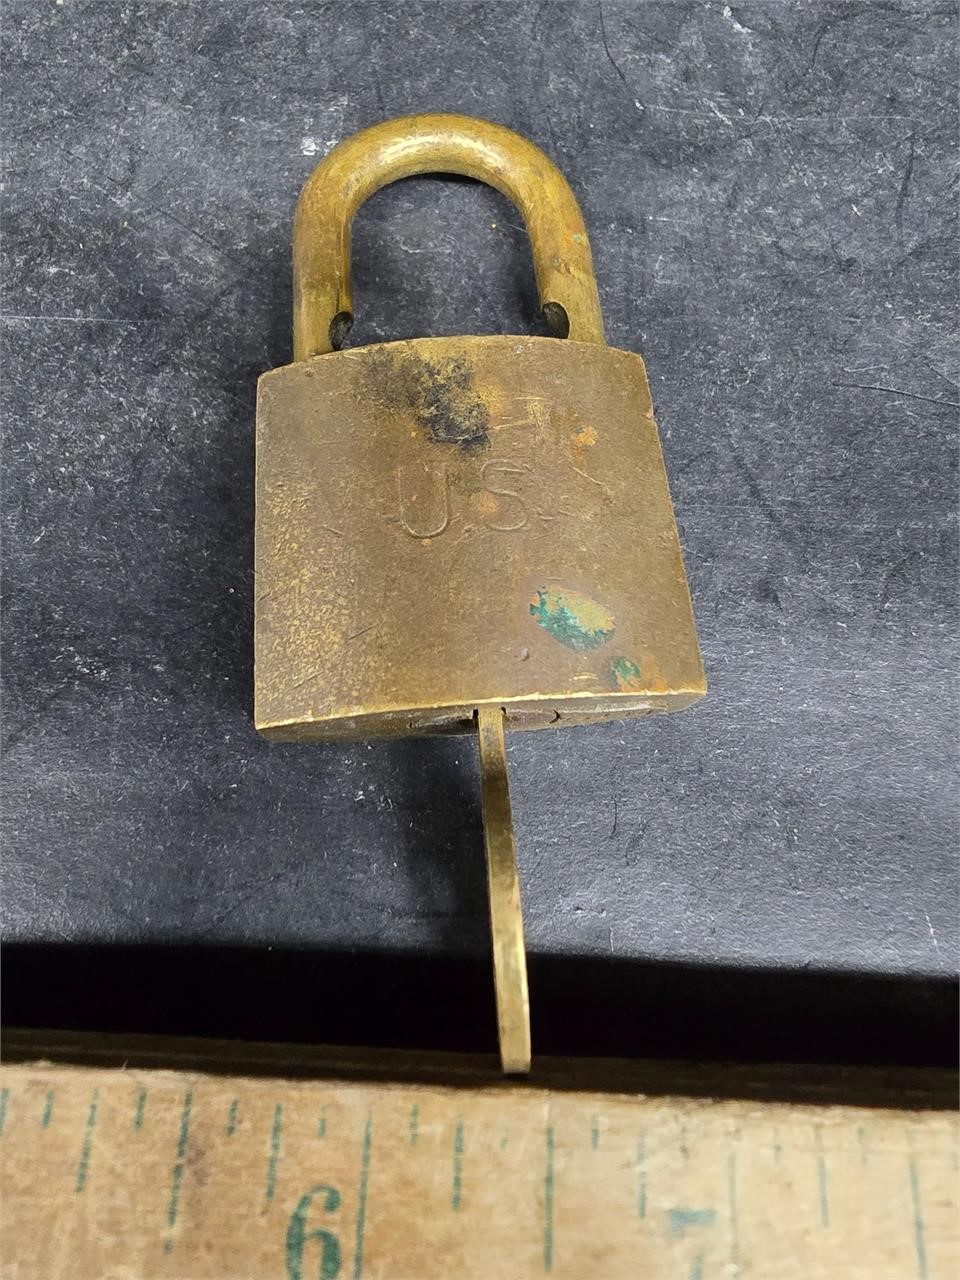 Old US padlock